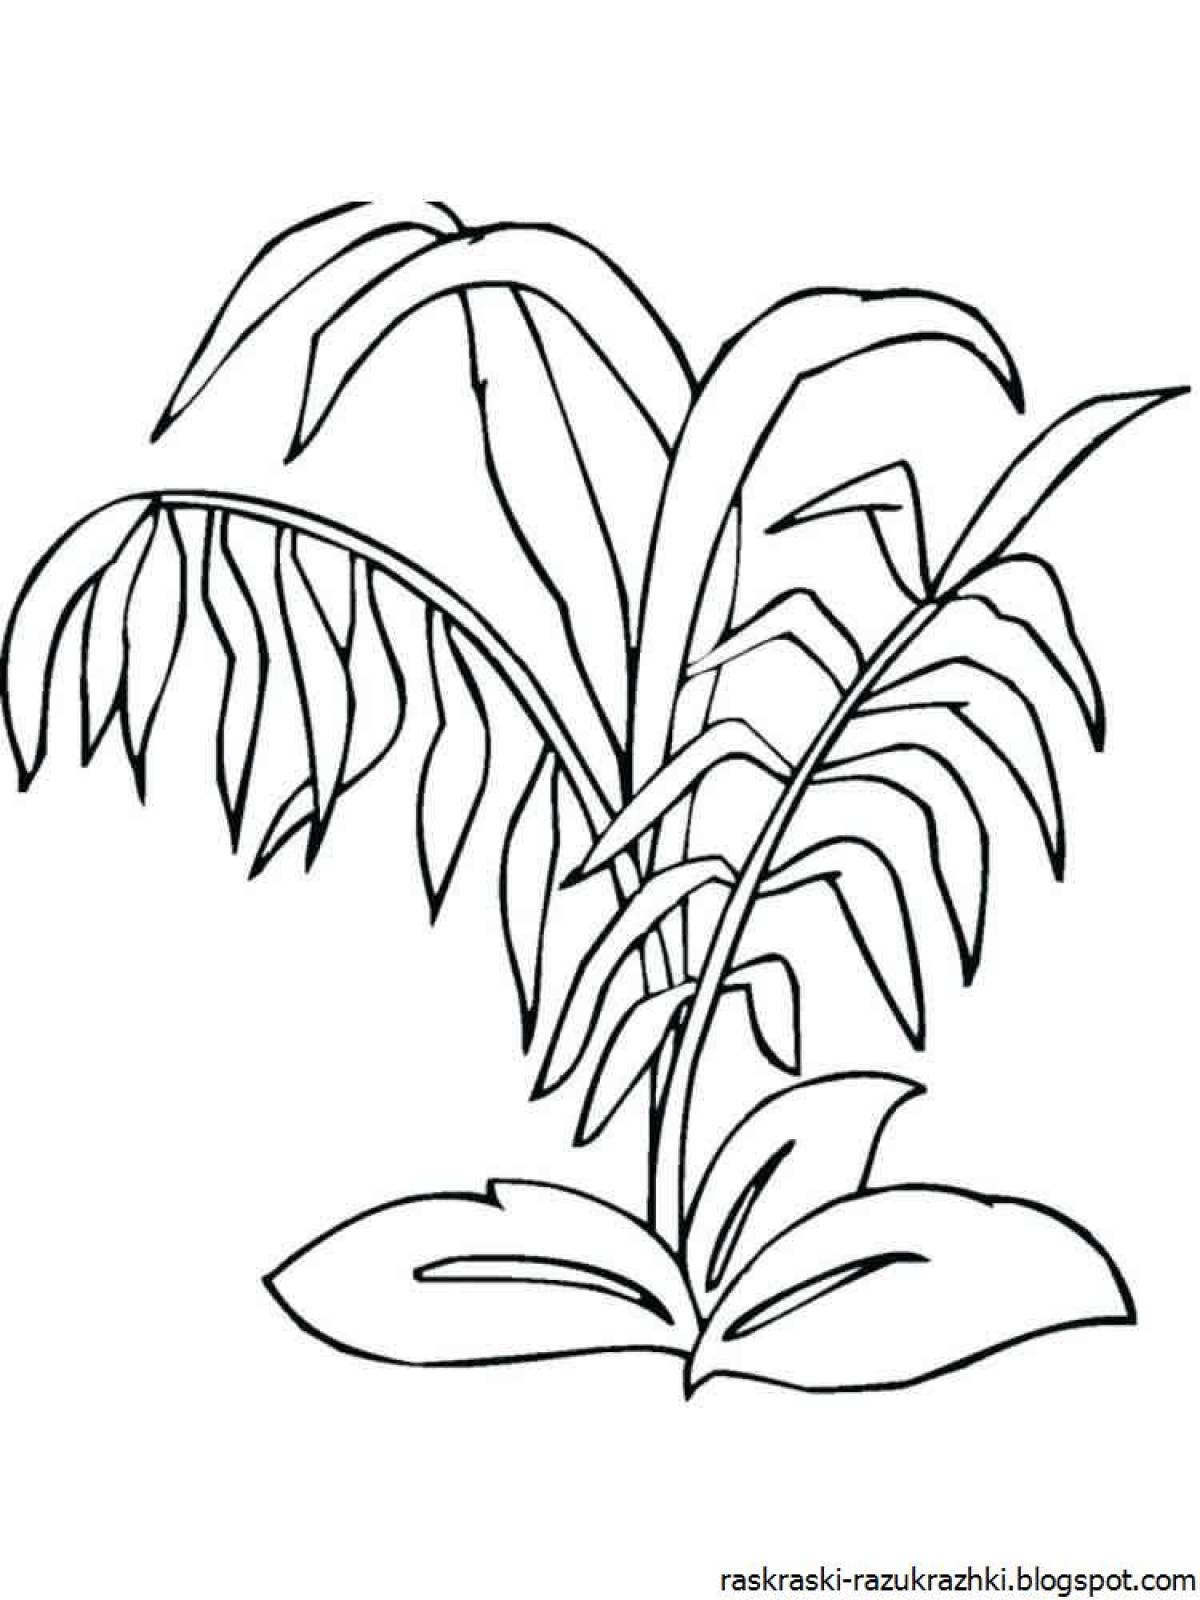 Plant coloring. Растения. Раскраска. Растения раскраска для детей. Трава раскраска для детей. Тропические растения раскраска.